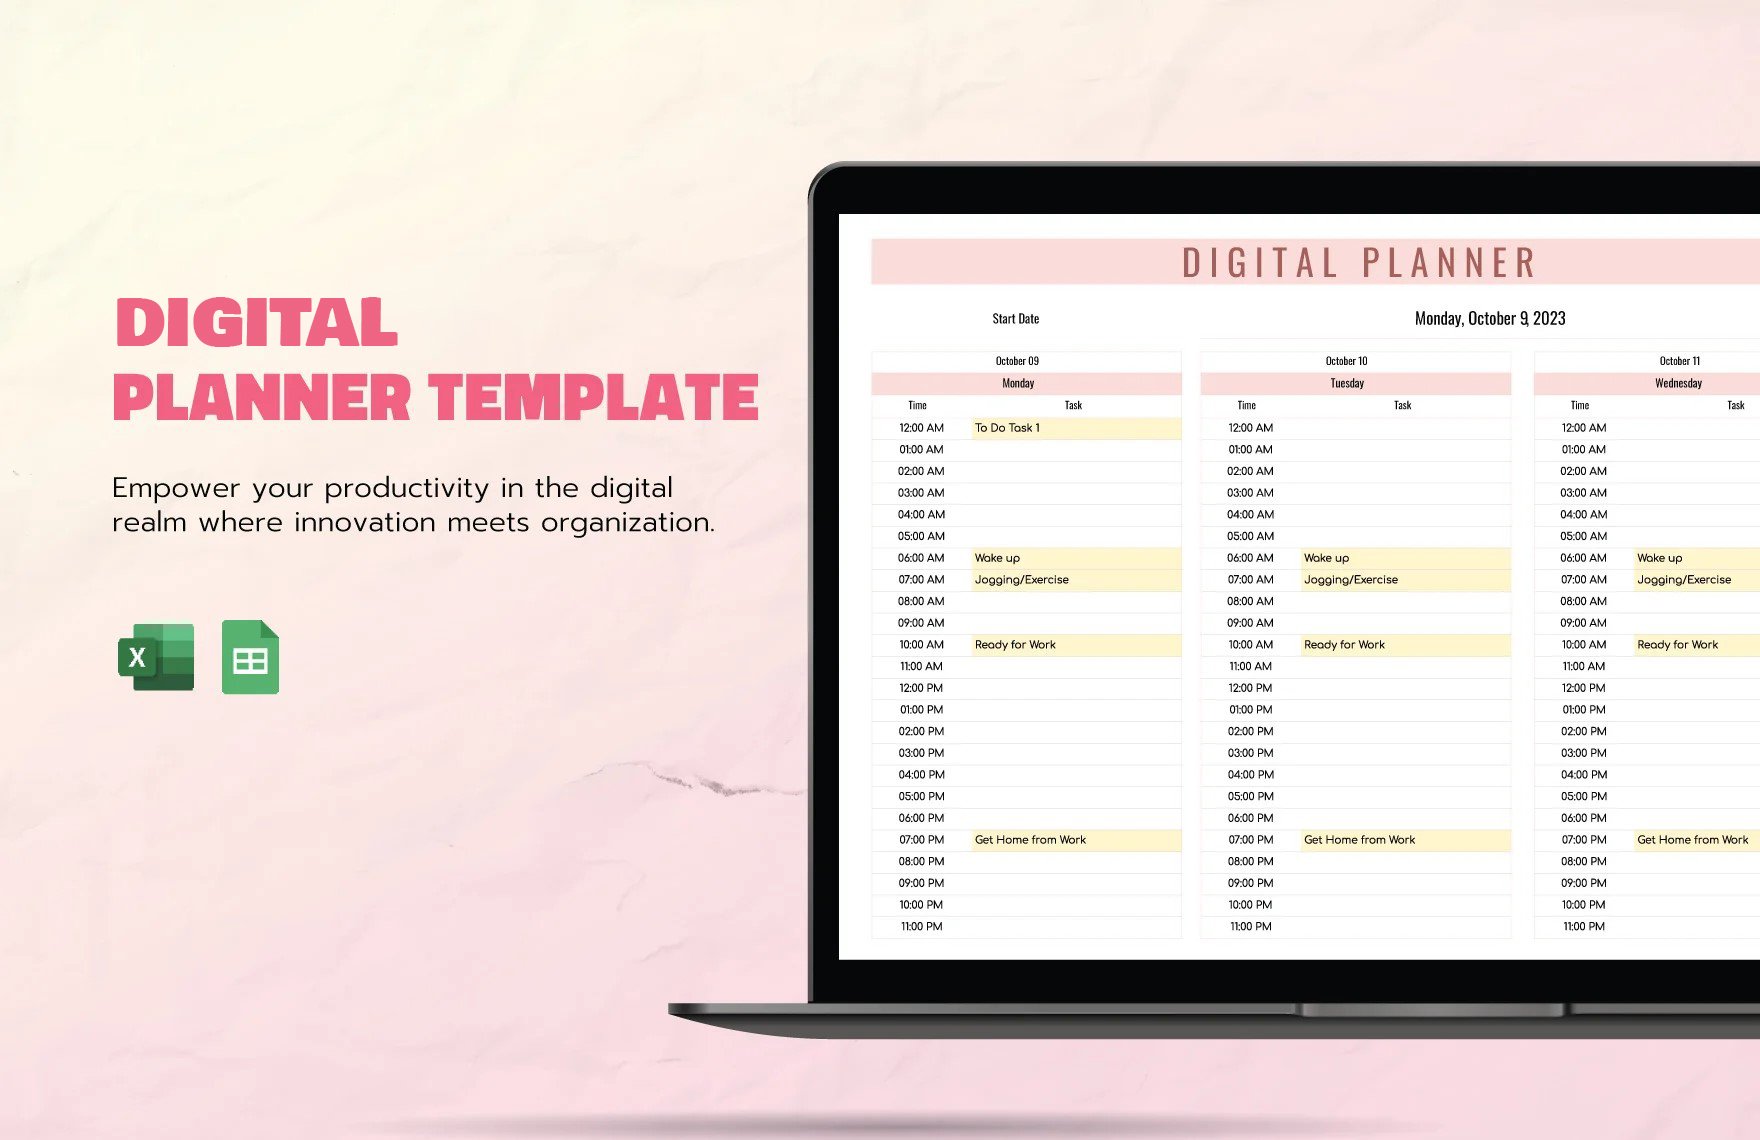 Digital Planner Template in Excel, Google Sheets